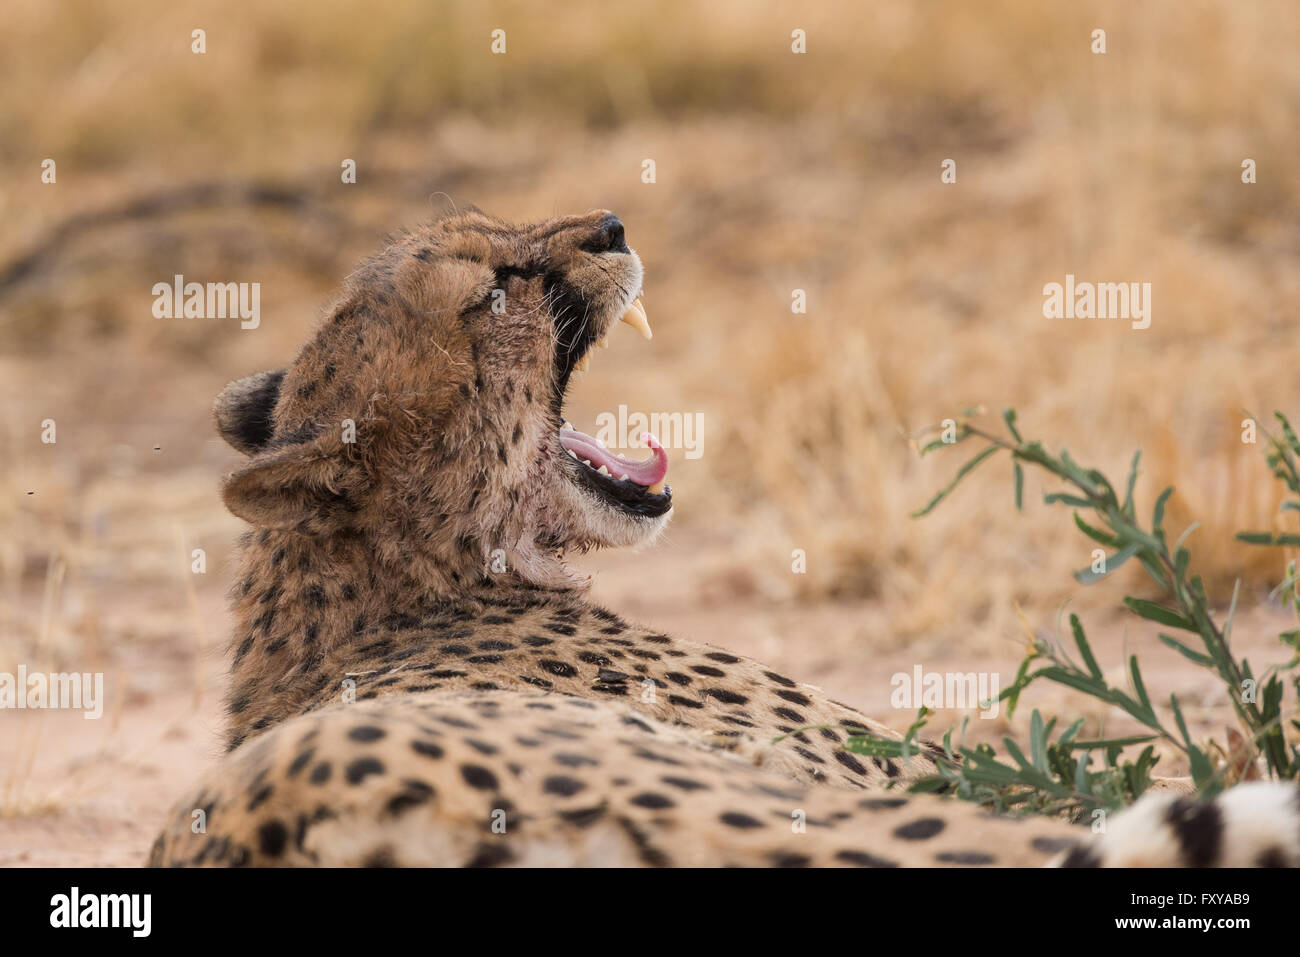 Cheetah (acinonyx jubatus) yawn showing teeth after eating, Namibia Stock Photo